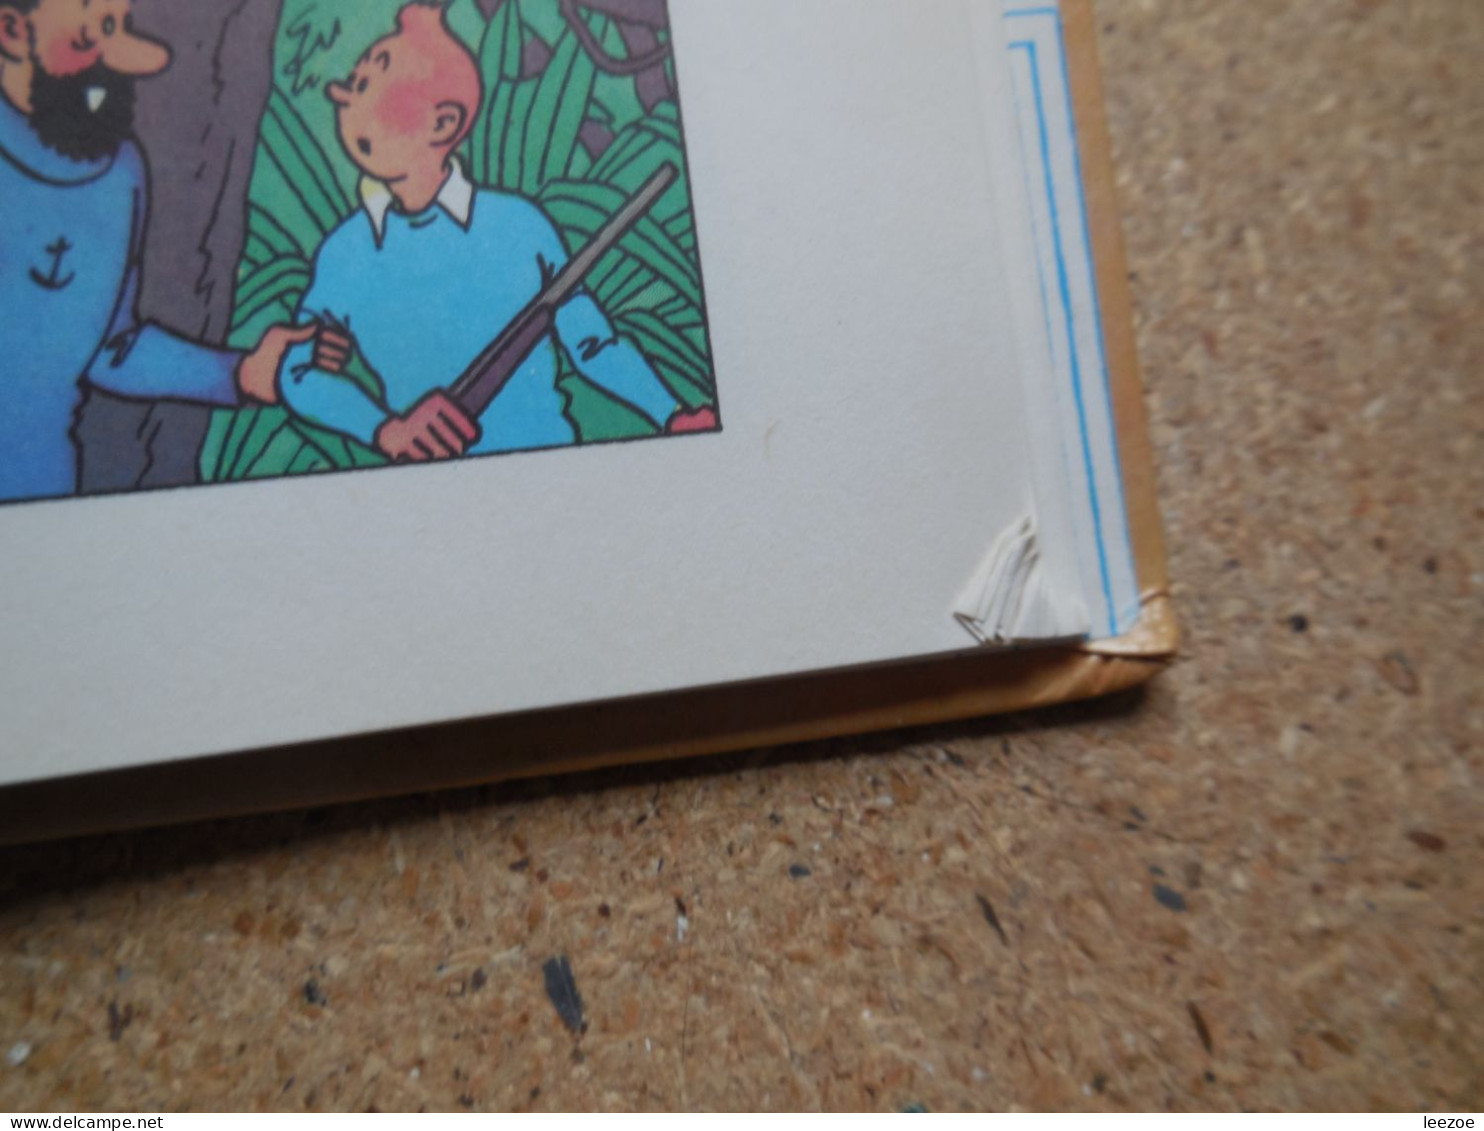 BD Tintin en Italien, Le avventure di Tintin IL TESORO DI RAKAM IL ROSSO, éditeur COMIC ART...RARE...........N5